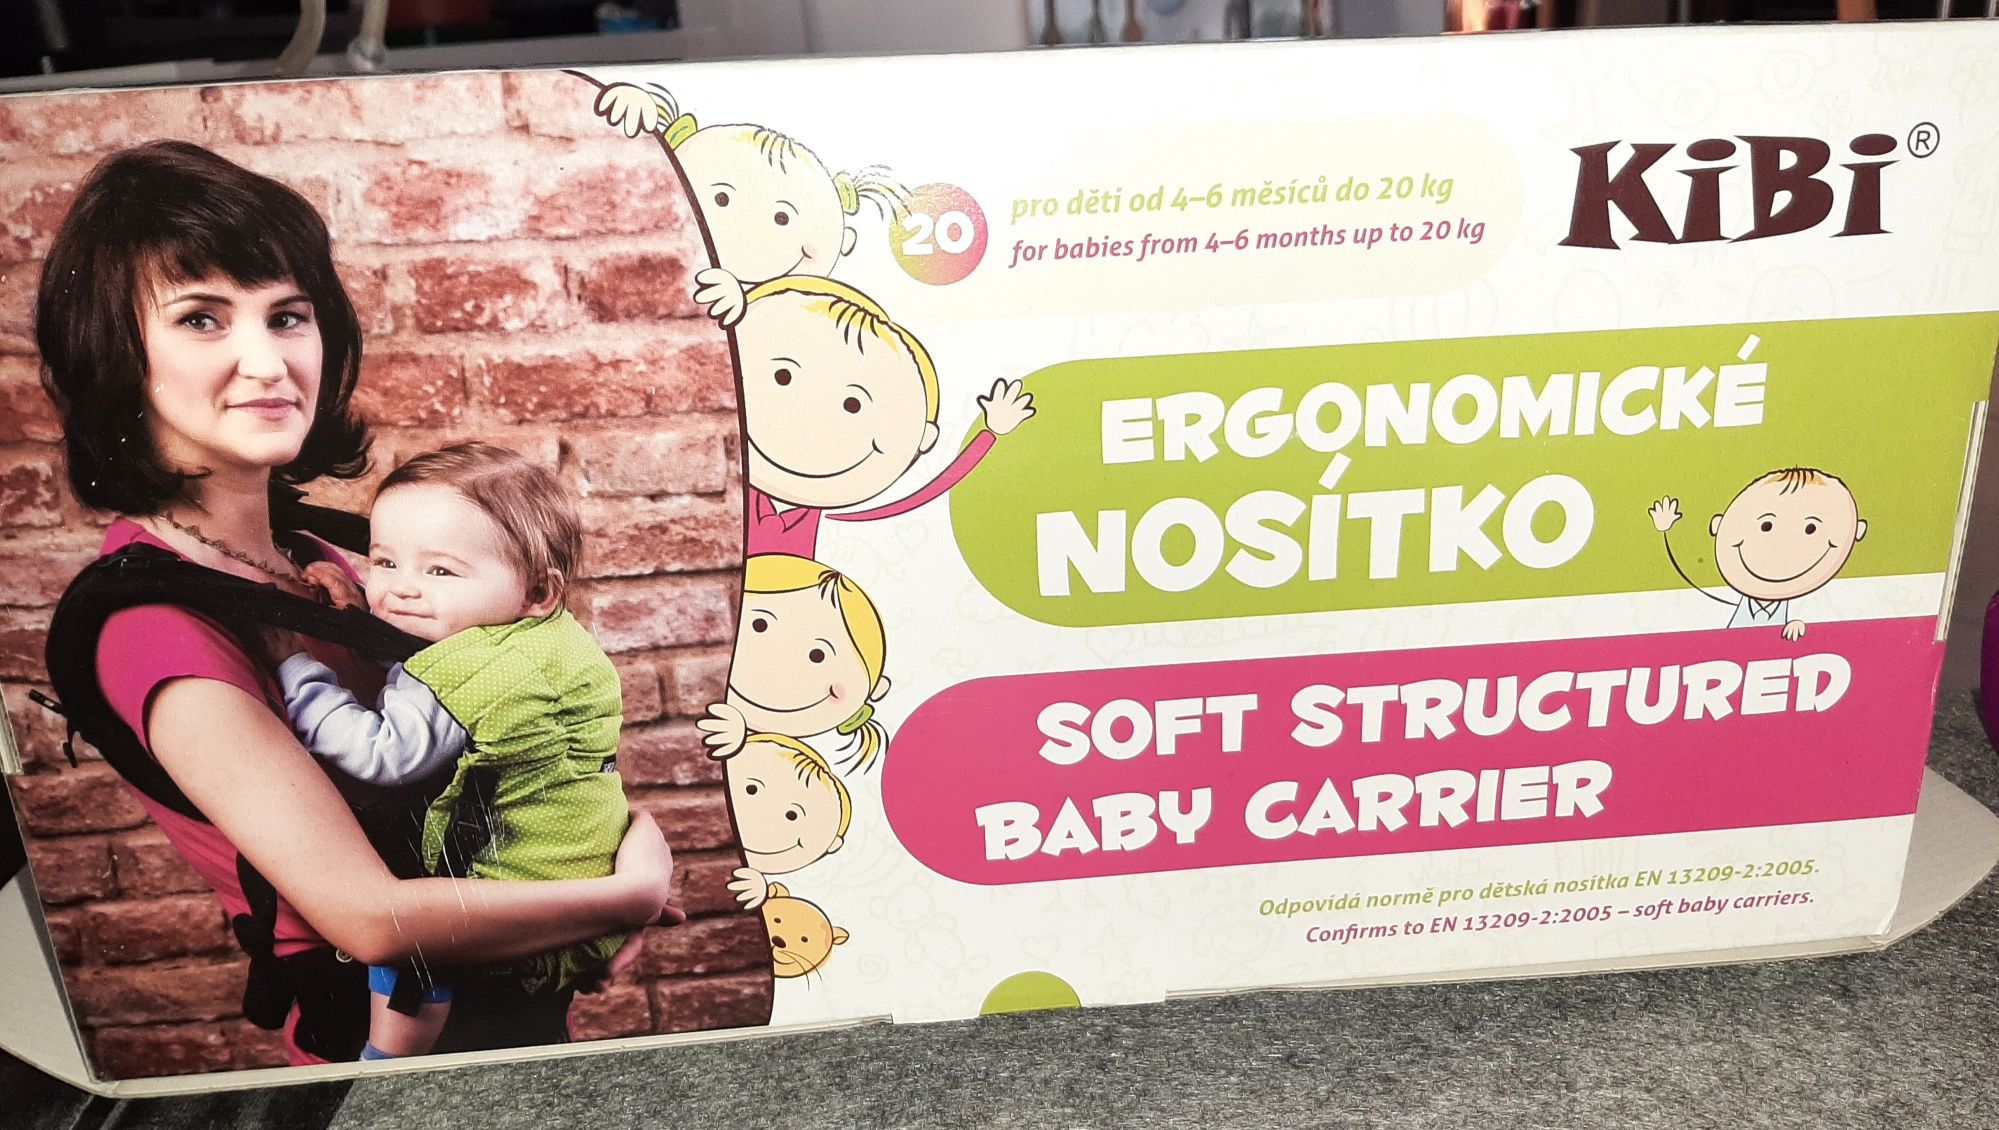 Porta bebés ergonómico- Kibi